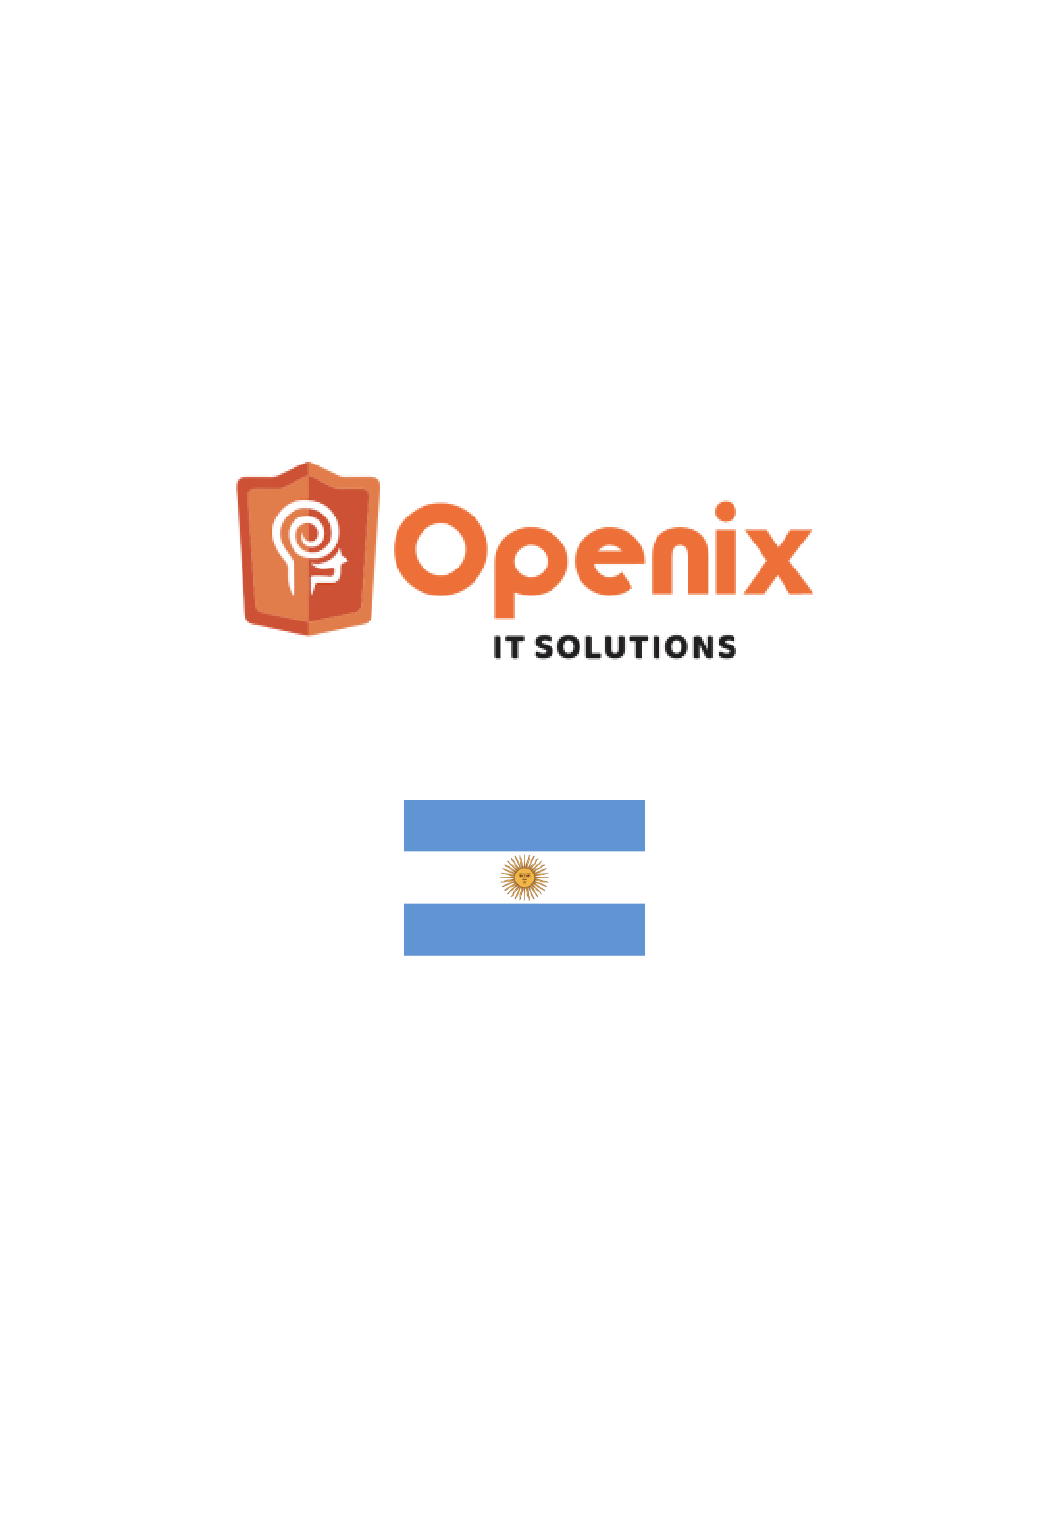 Openix It solutions